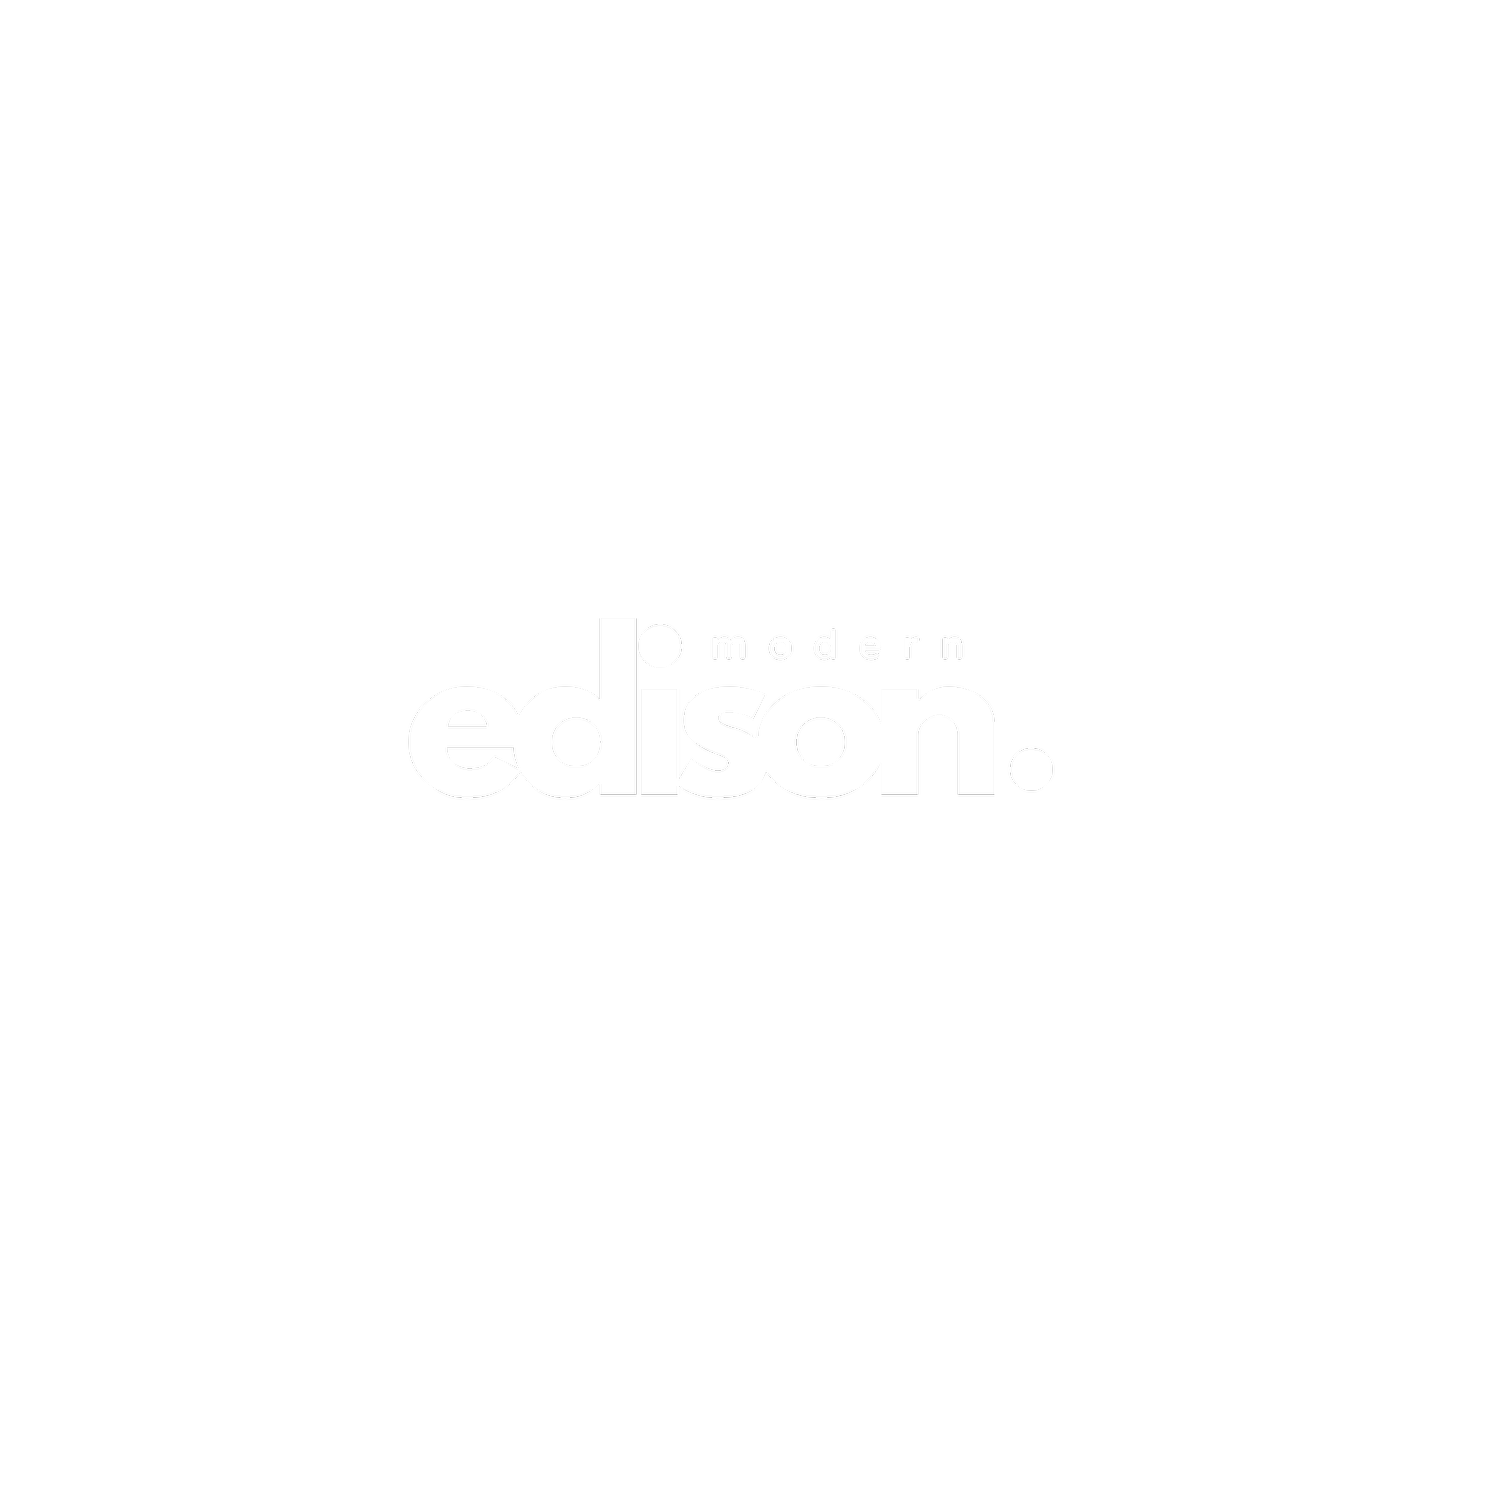 Modern Edison